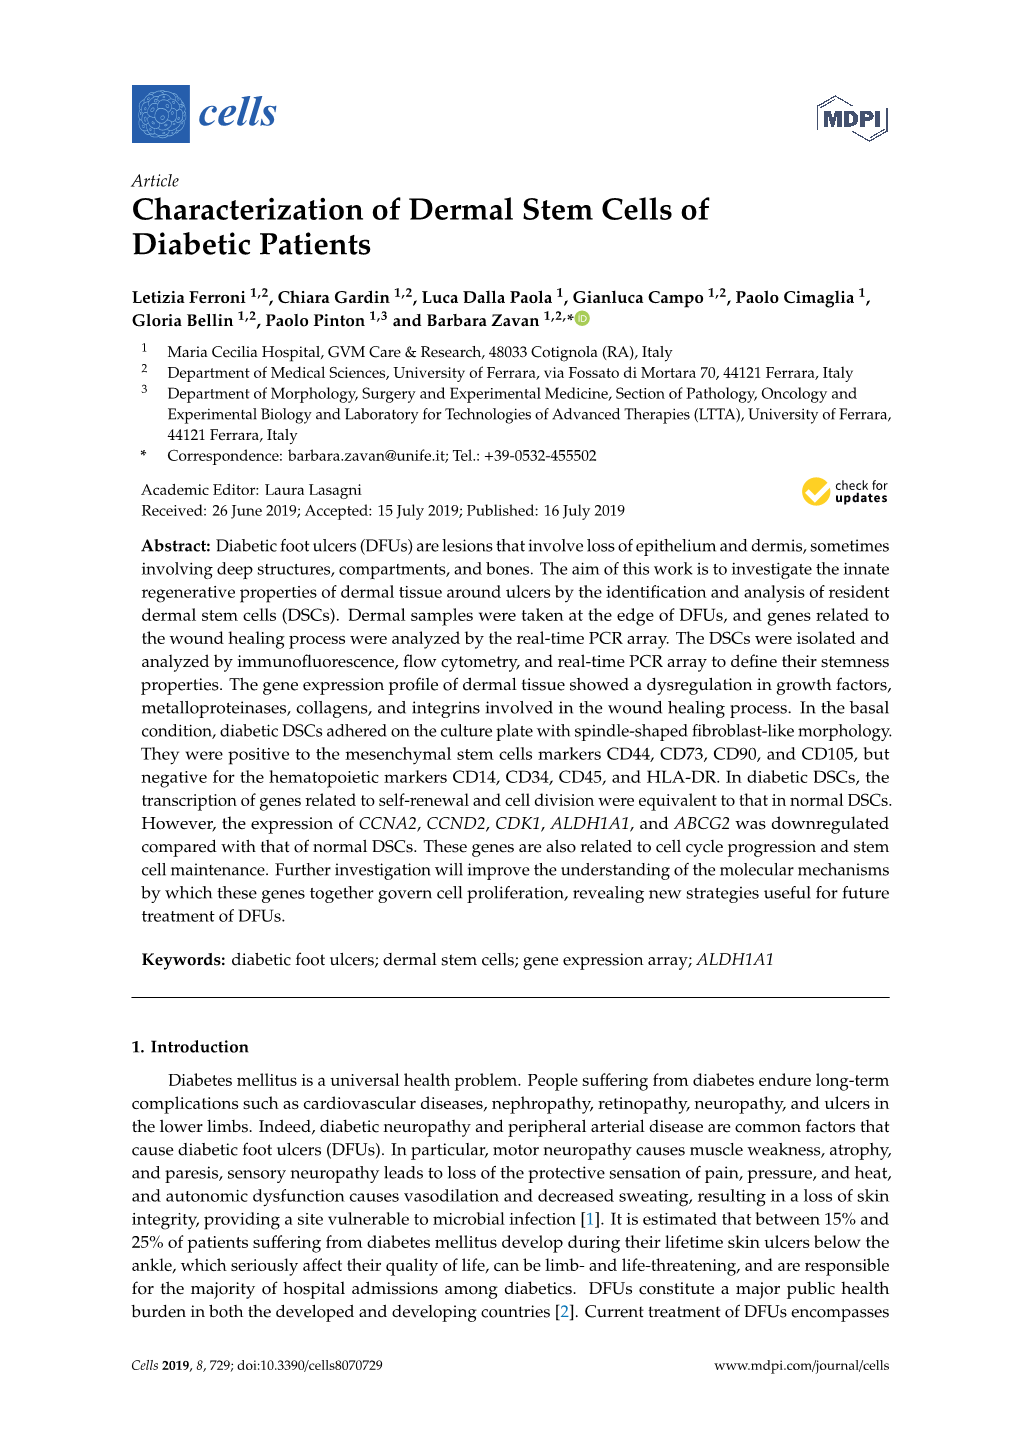 Characterization of Dermal Stem Cells of Diabetic Patients